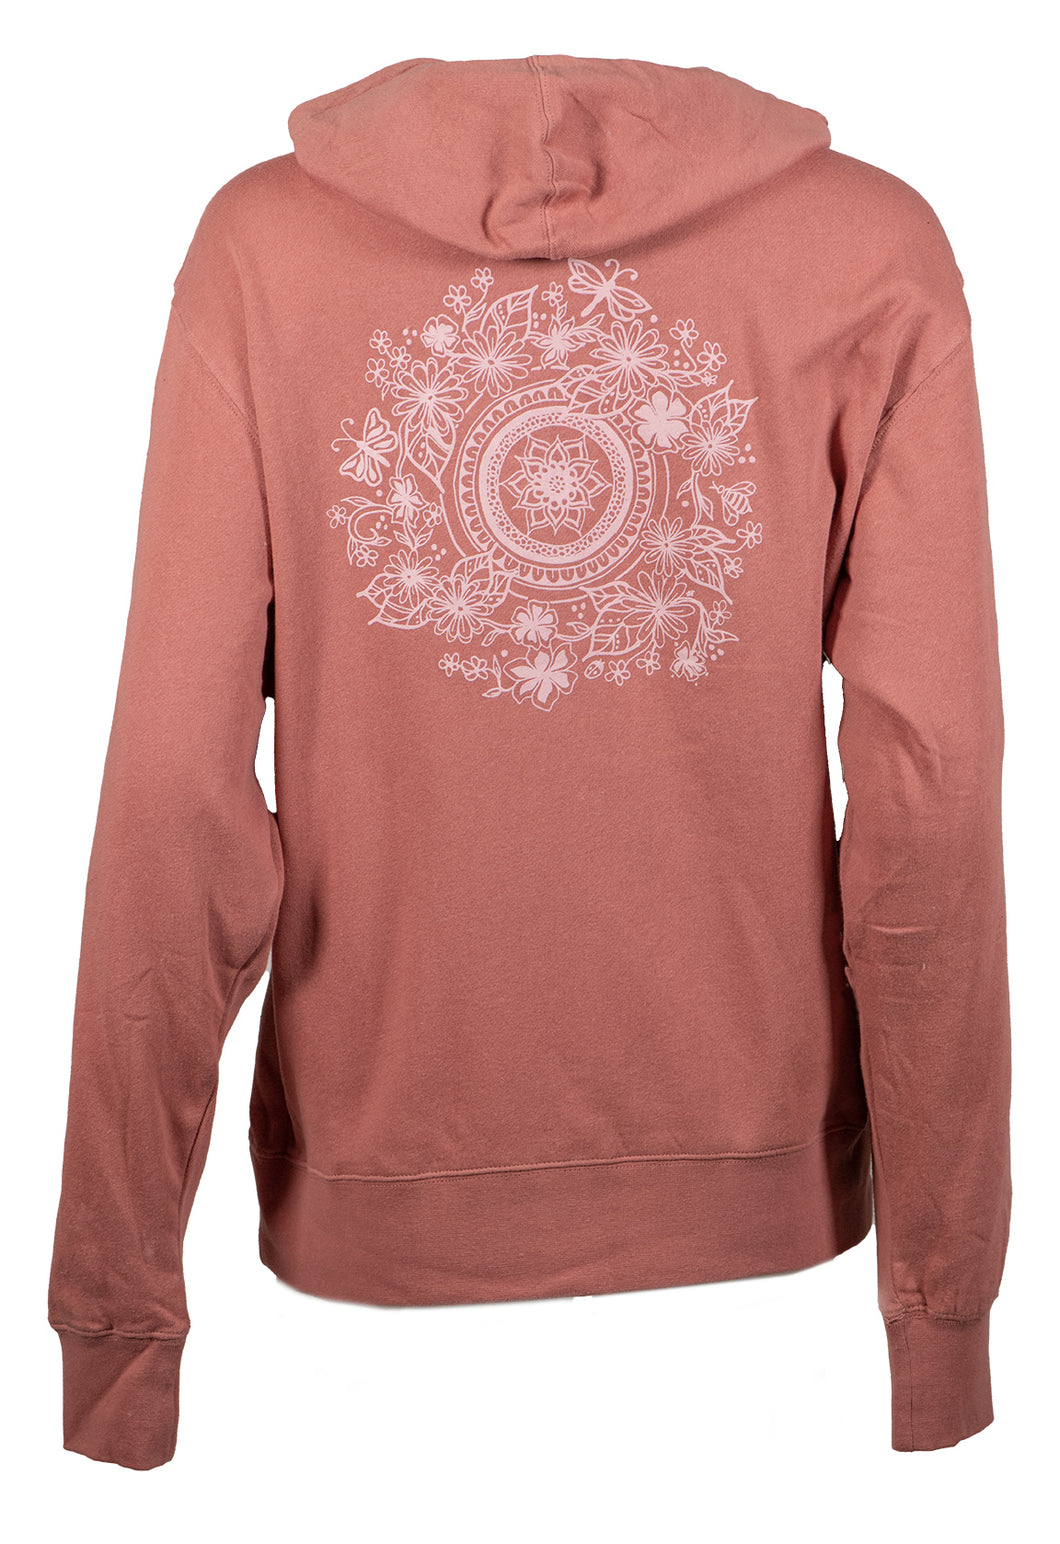 Back view of the Zippered Flower Mandala Sweatshirt in rose.